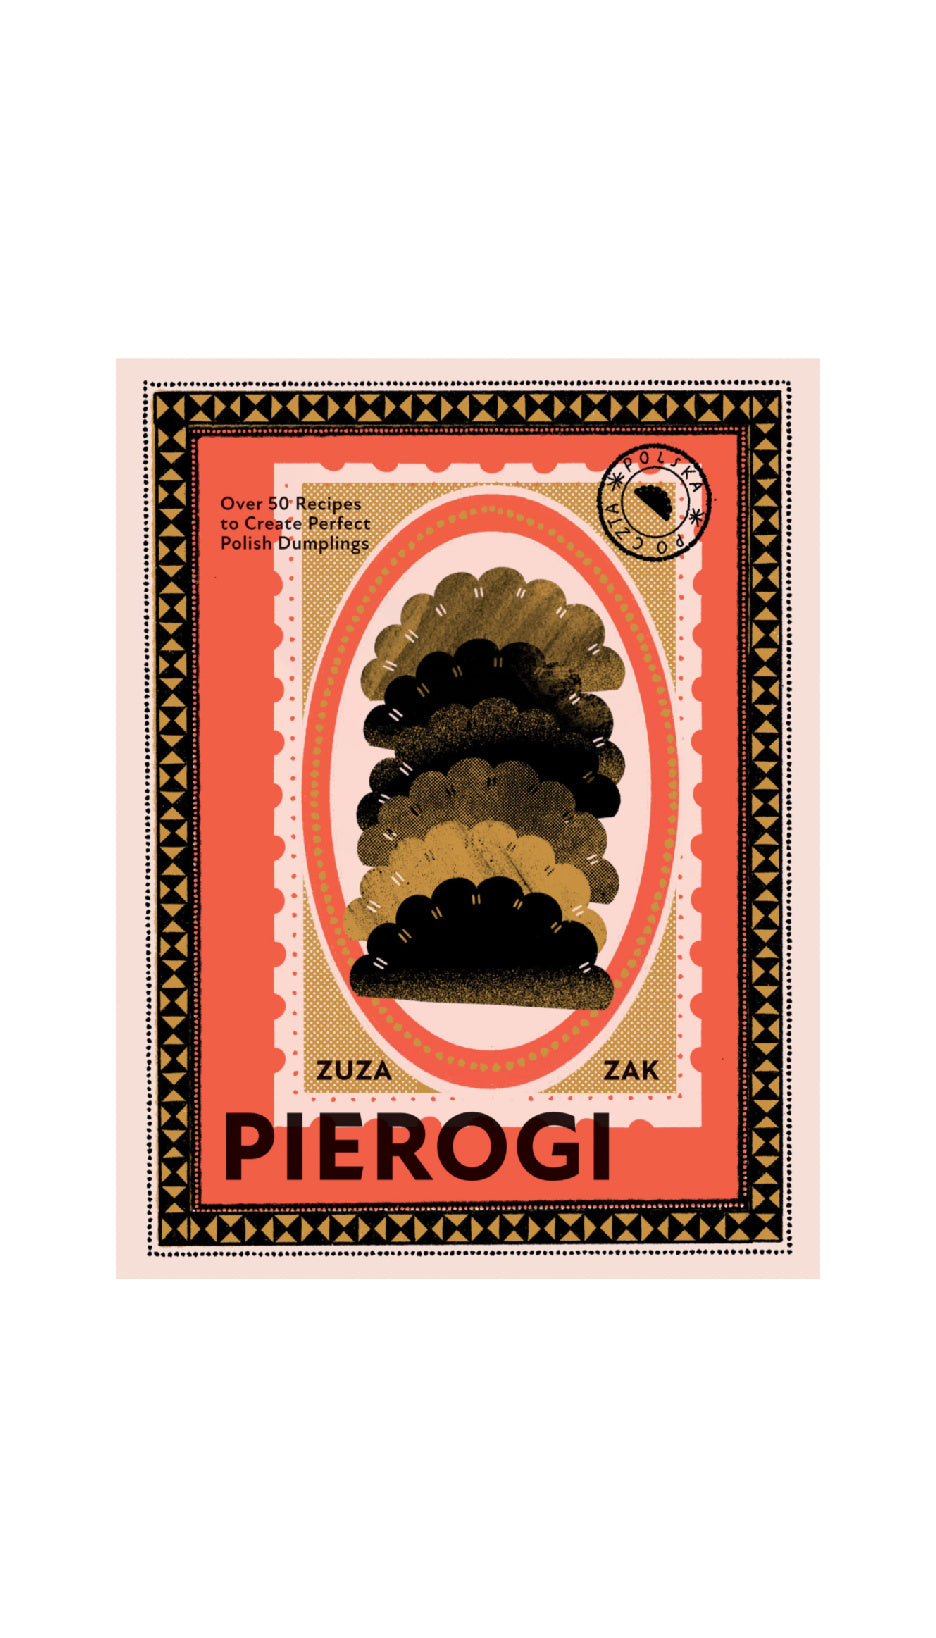 Pierogi: Over 50 Recipes to Create Perfect Polish Dumplings / ZUZA ZAK